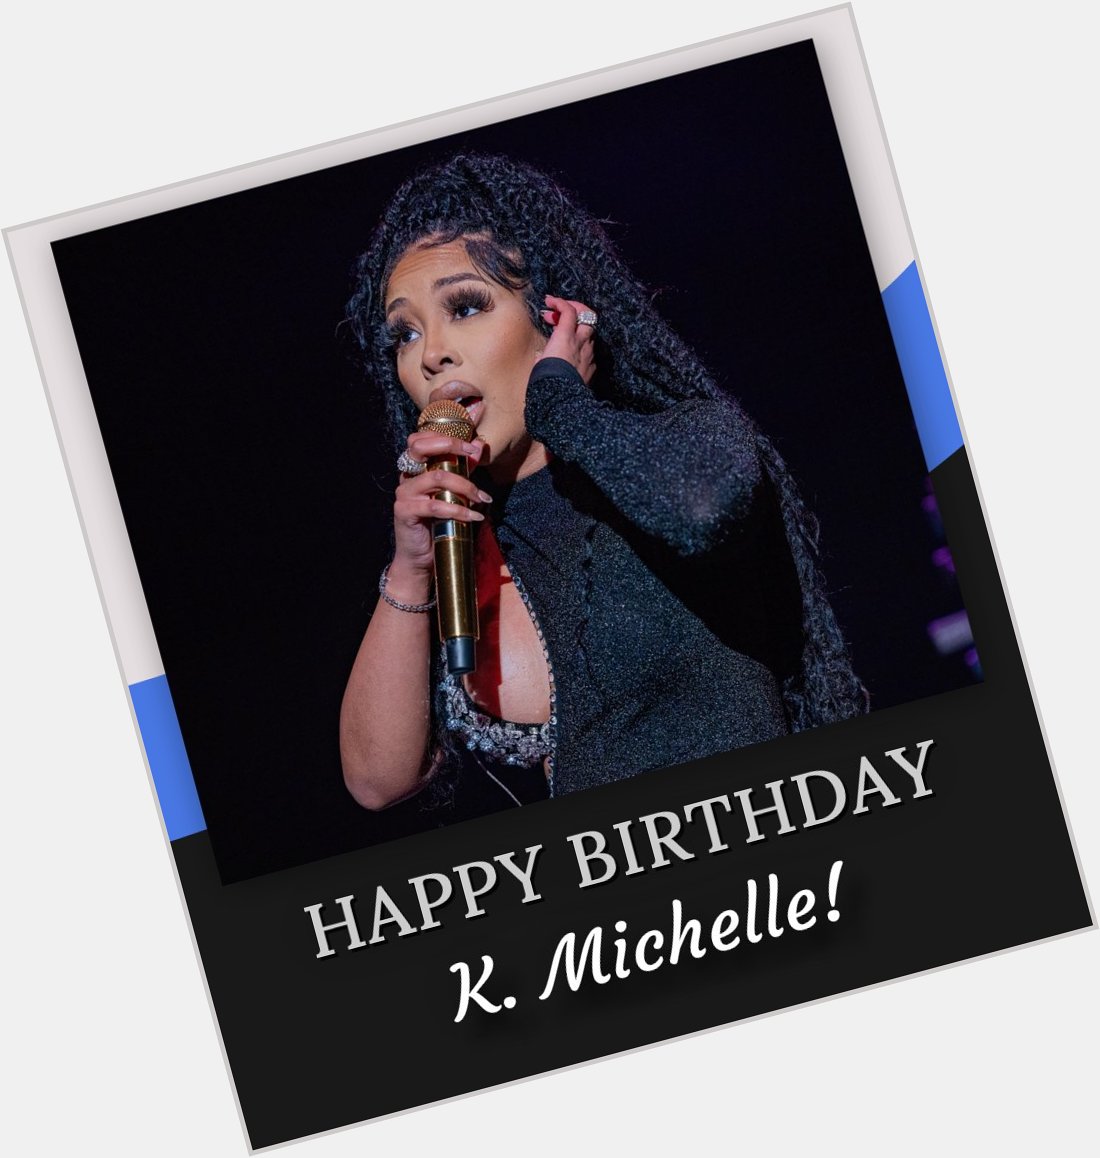 Happy birthday K. Michelle! 